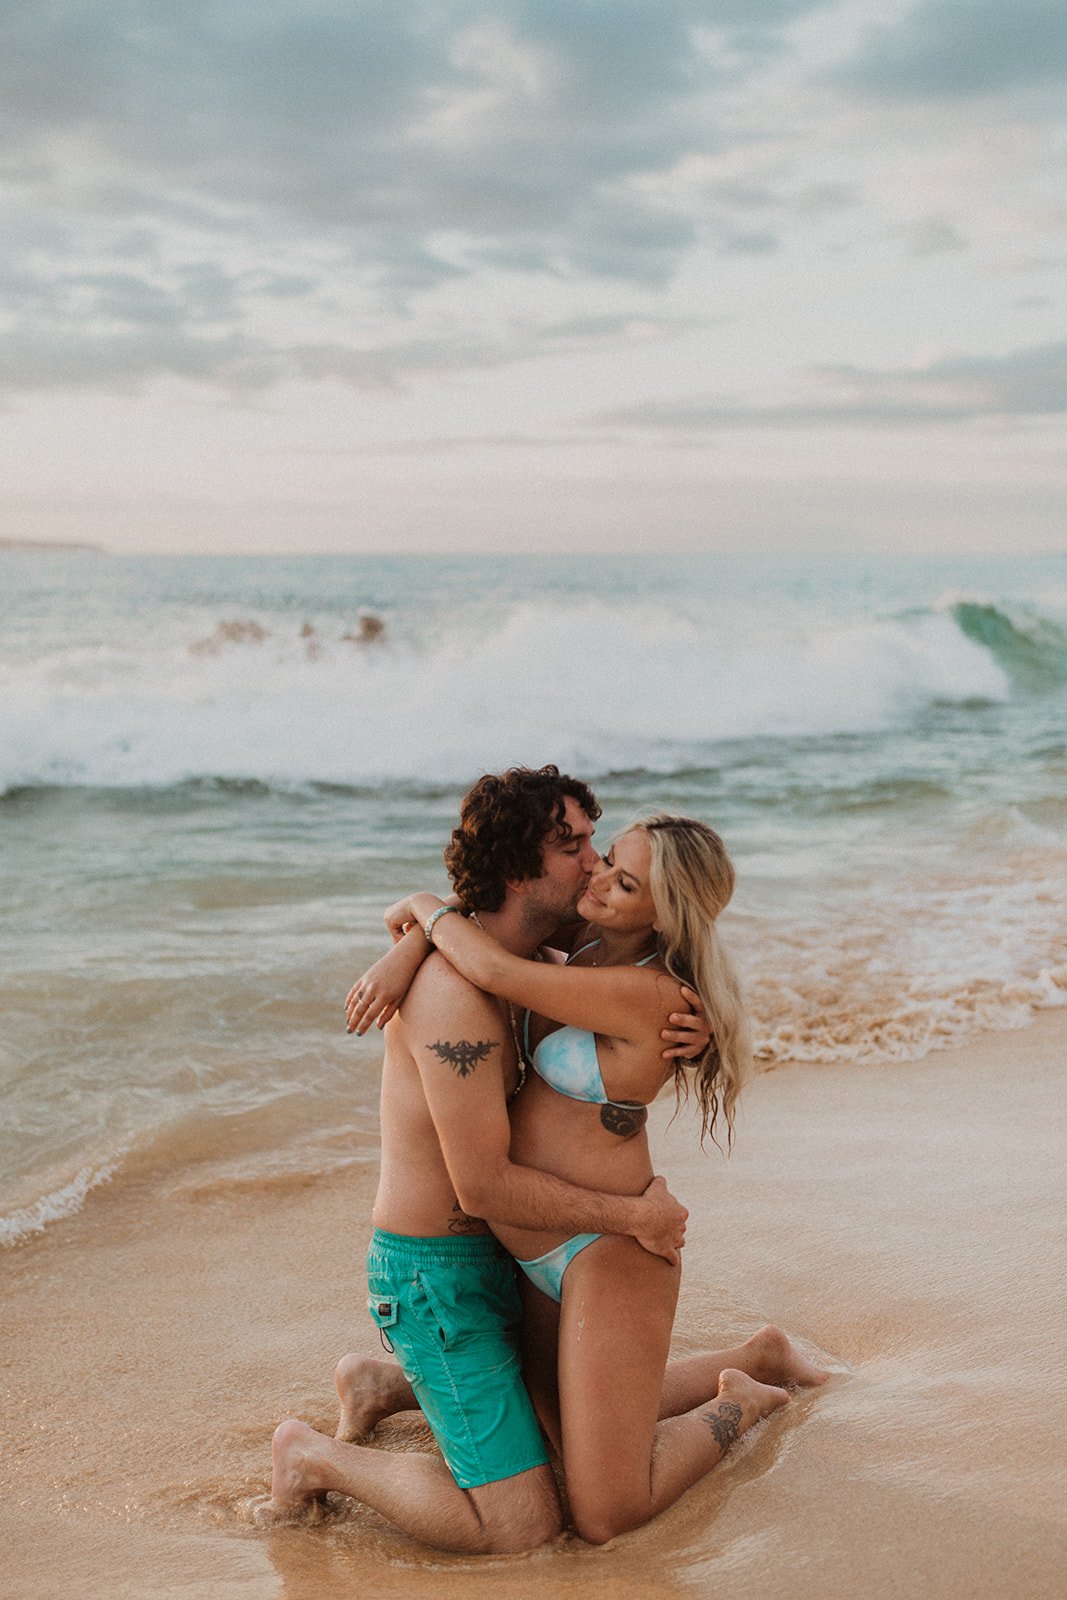 Beautiful Couple Posing On Sea Beach Stock Photo 46036933 | Shutterstock